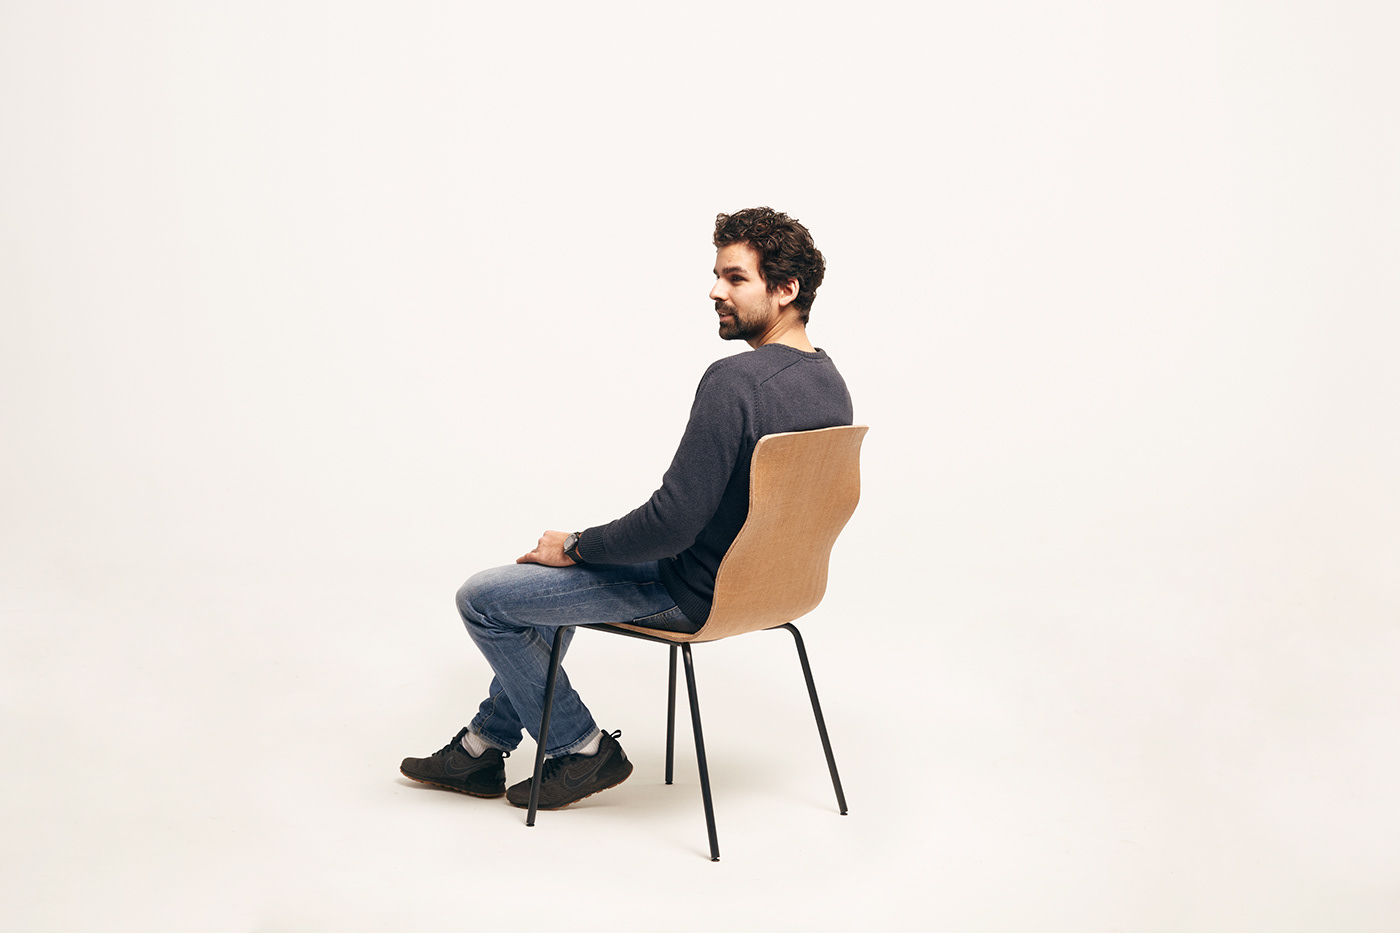 Biocomposite biodegradable chair Composite furniture furnituredesign